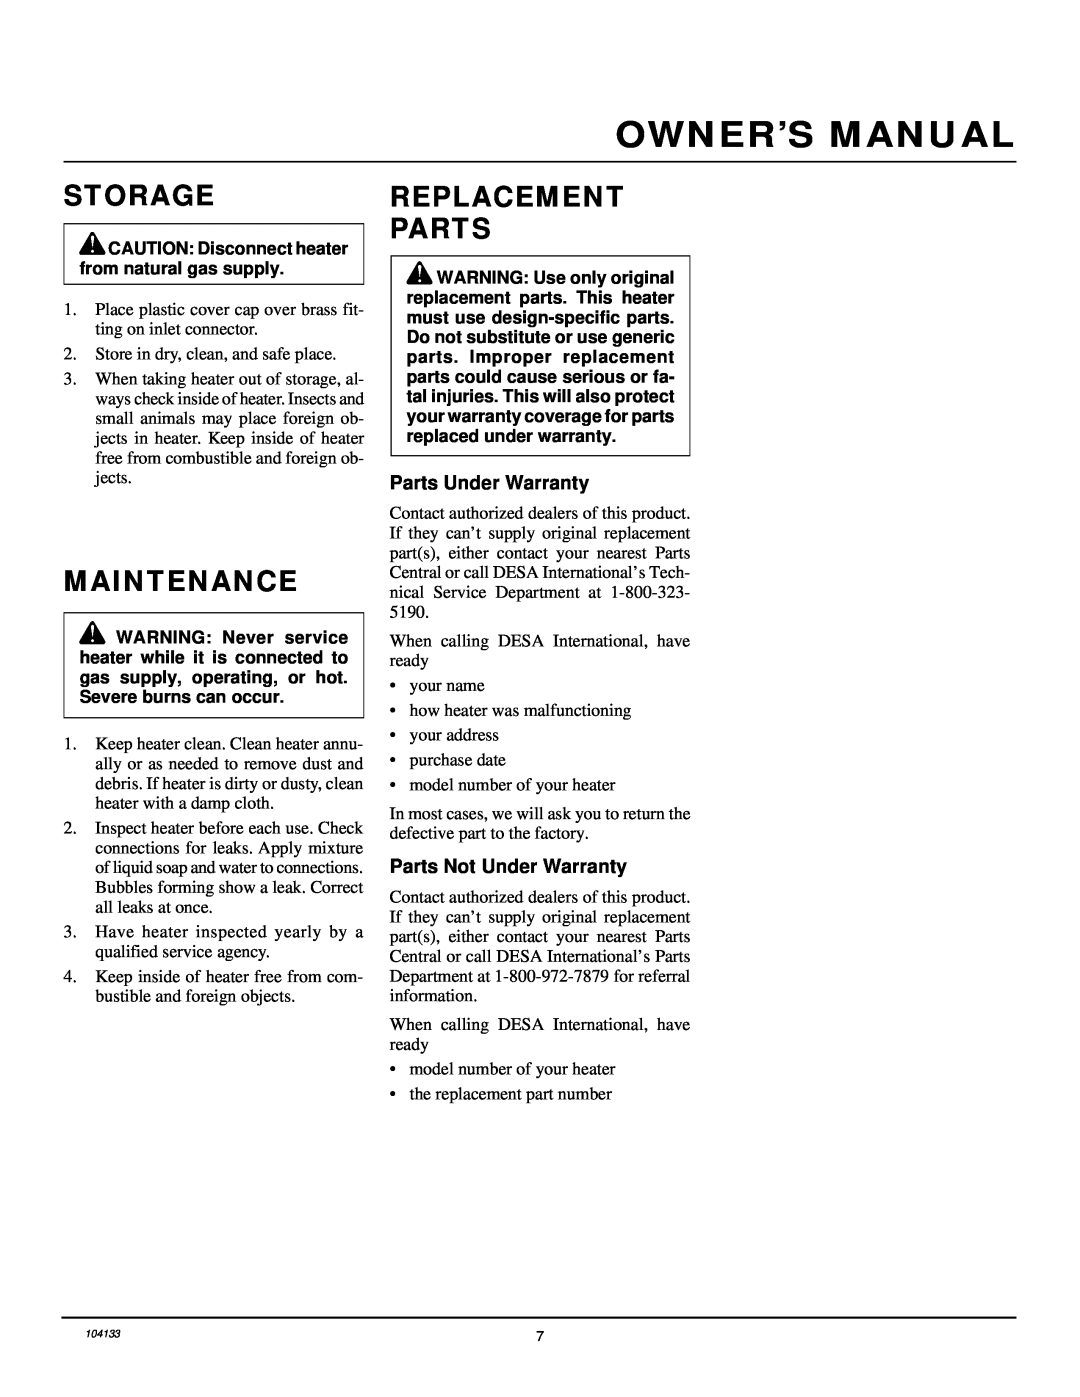 Desa TC250RNG owner manual Storage, Maintenance, Replacement Parts, Parts Under Warranty, Parts Not Under Warranty 